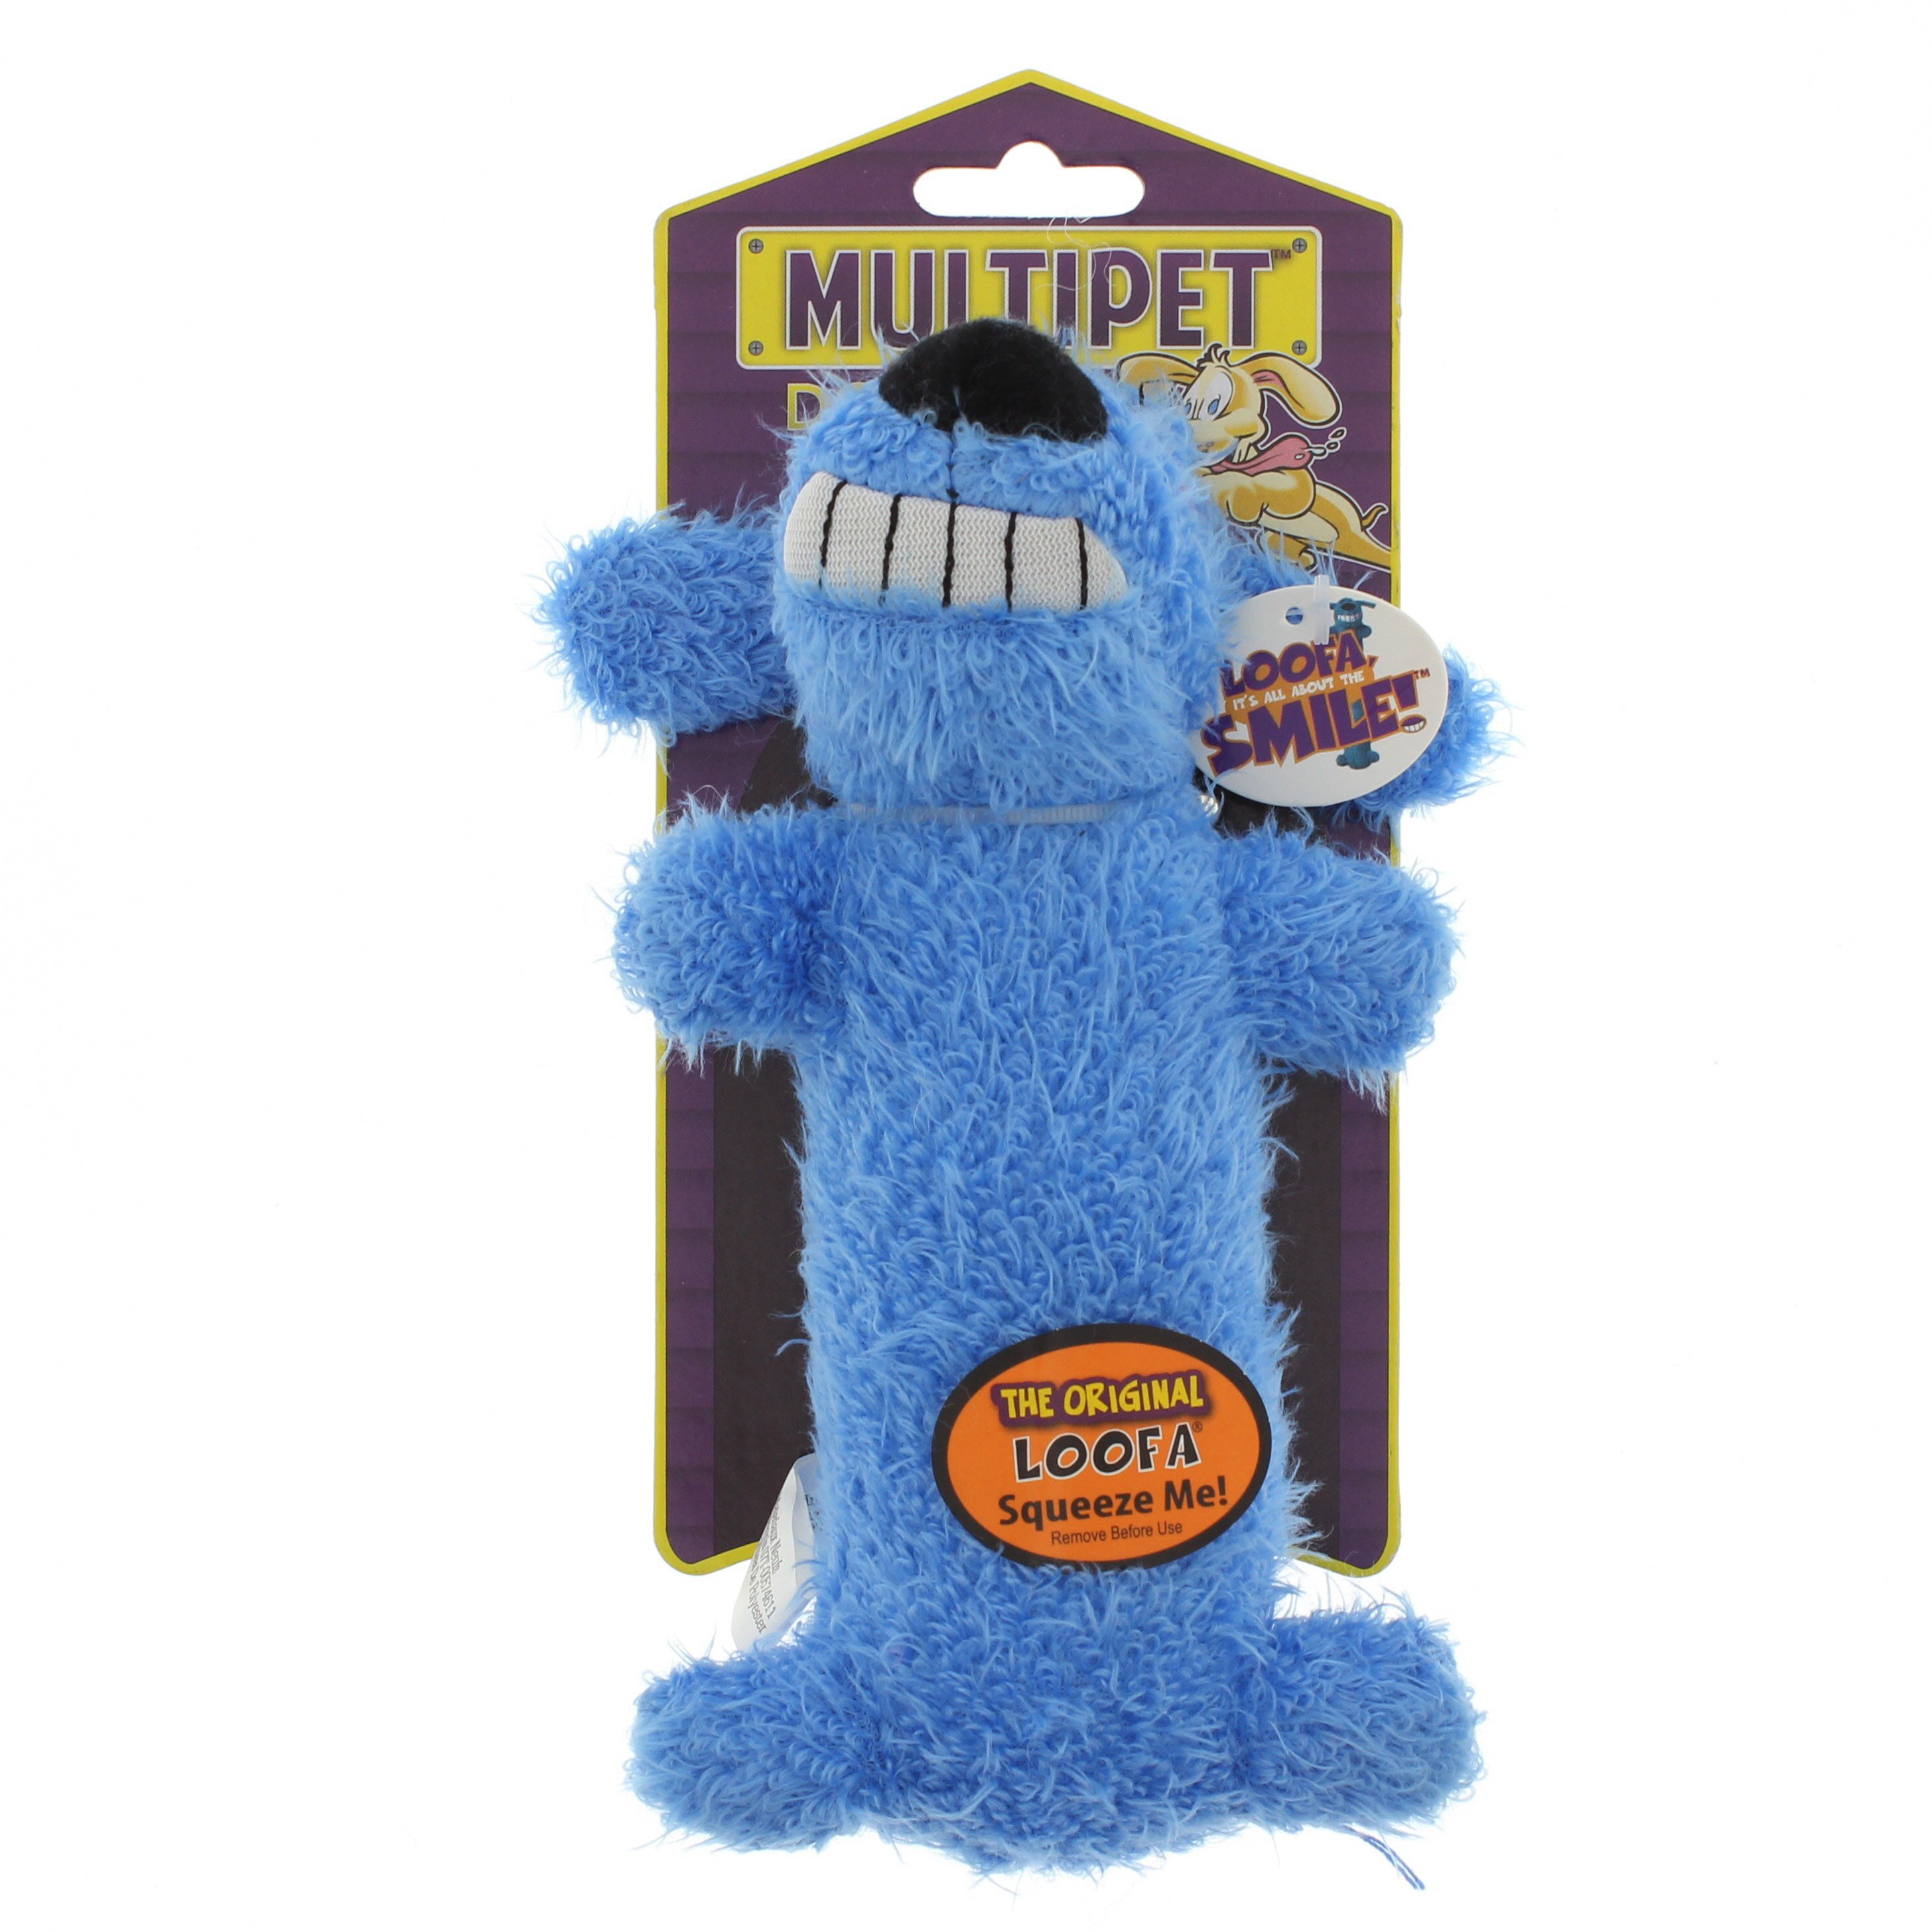 Multipet Loofa The Original Dog Toy - Blue - 6 : Target